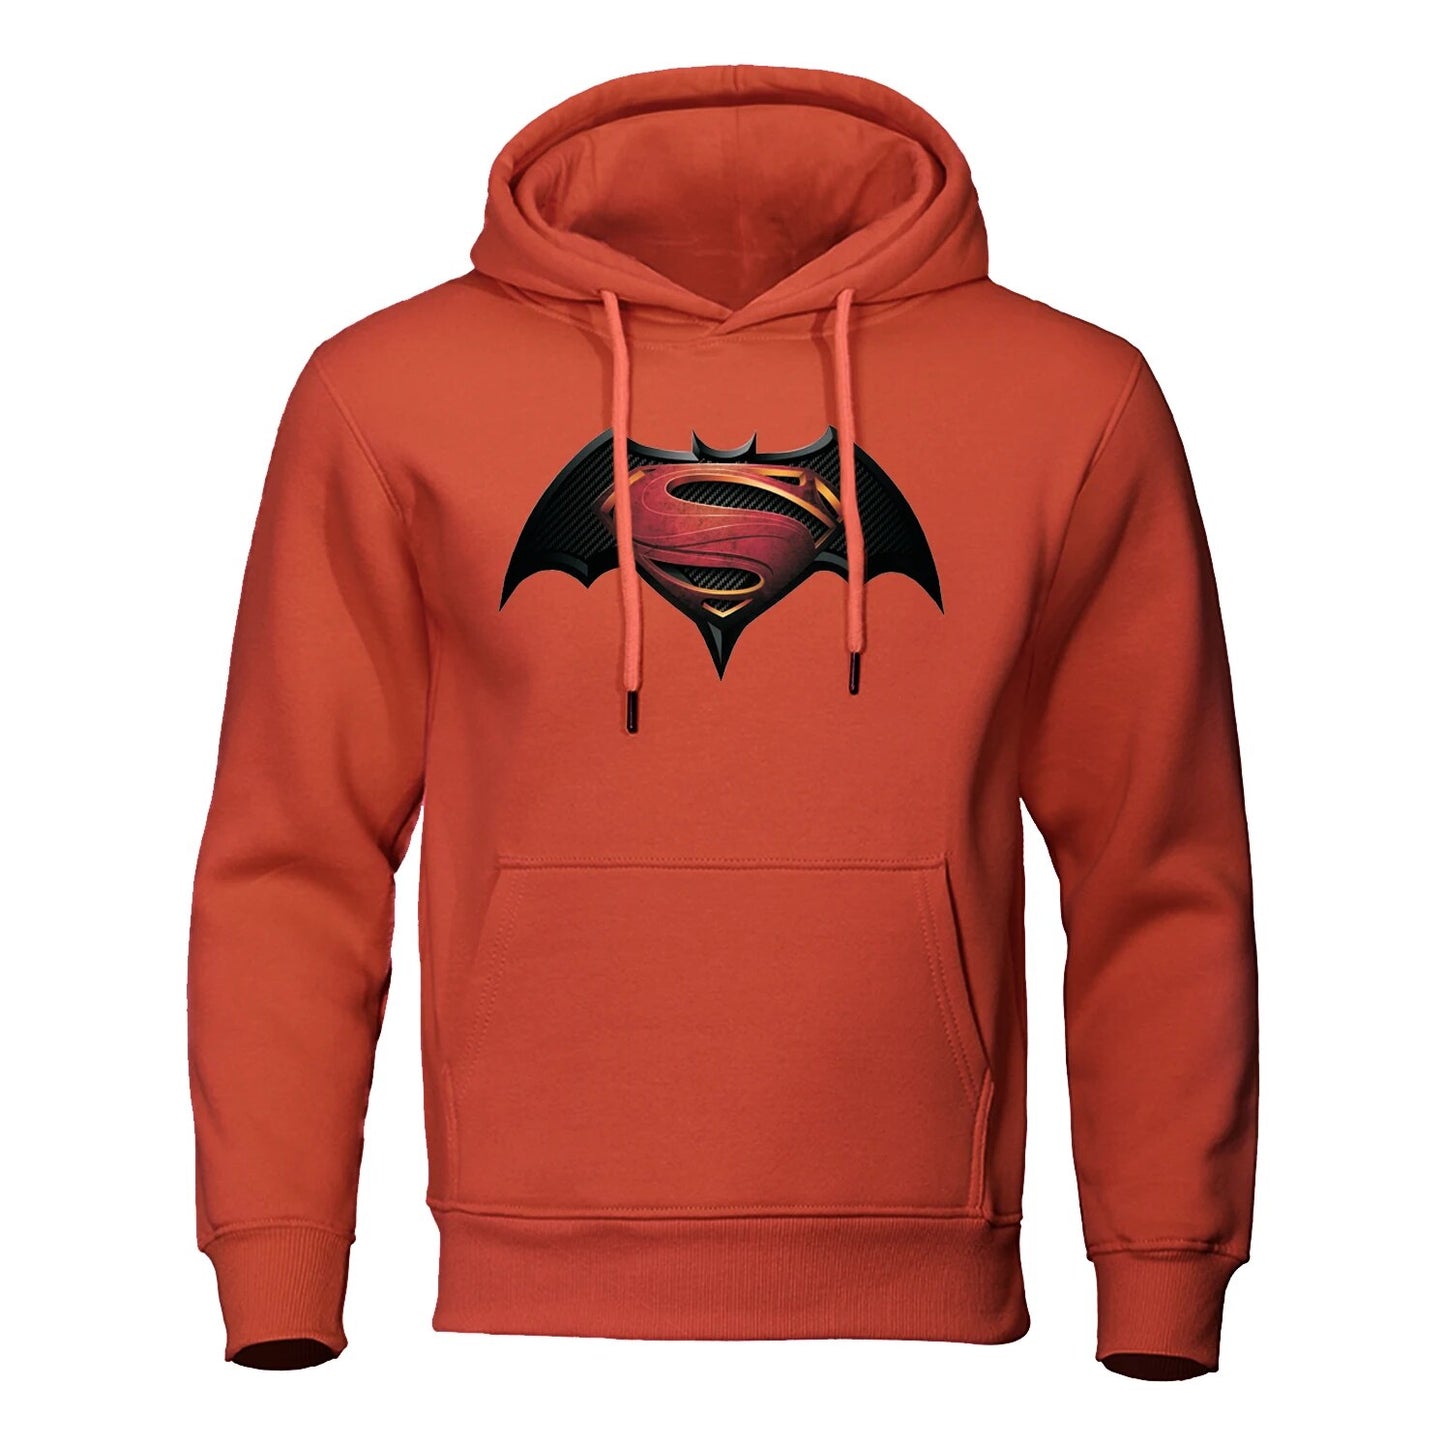 Superman / Batman - Super-Bat Hoodie - Men's Casual Streetwear-Brick Red1-S-